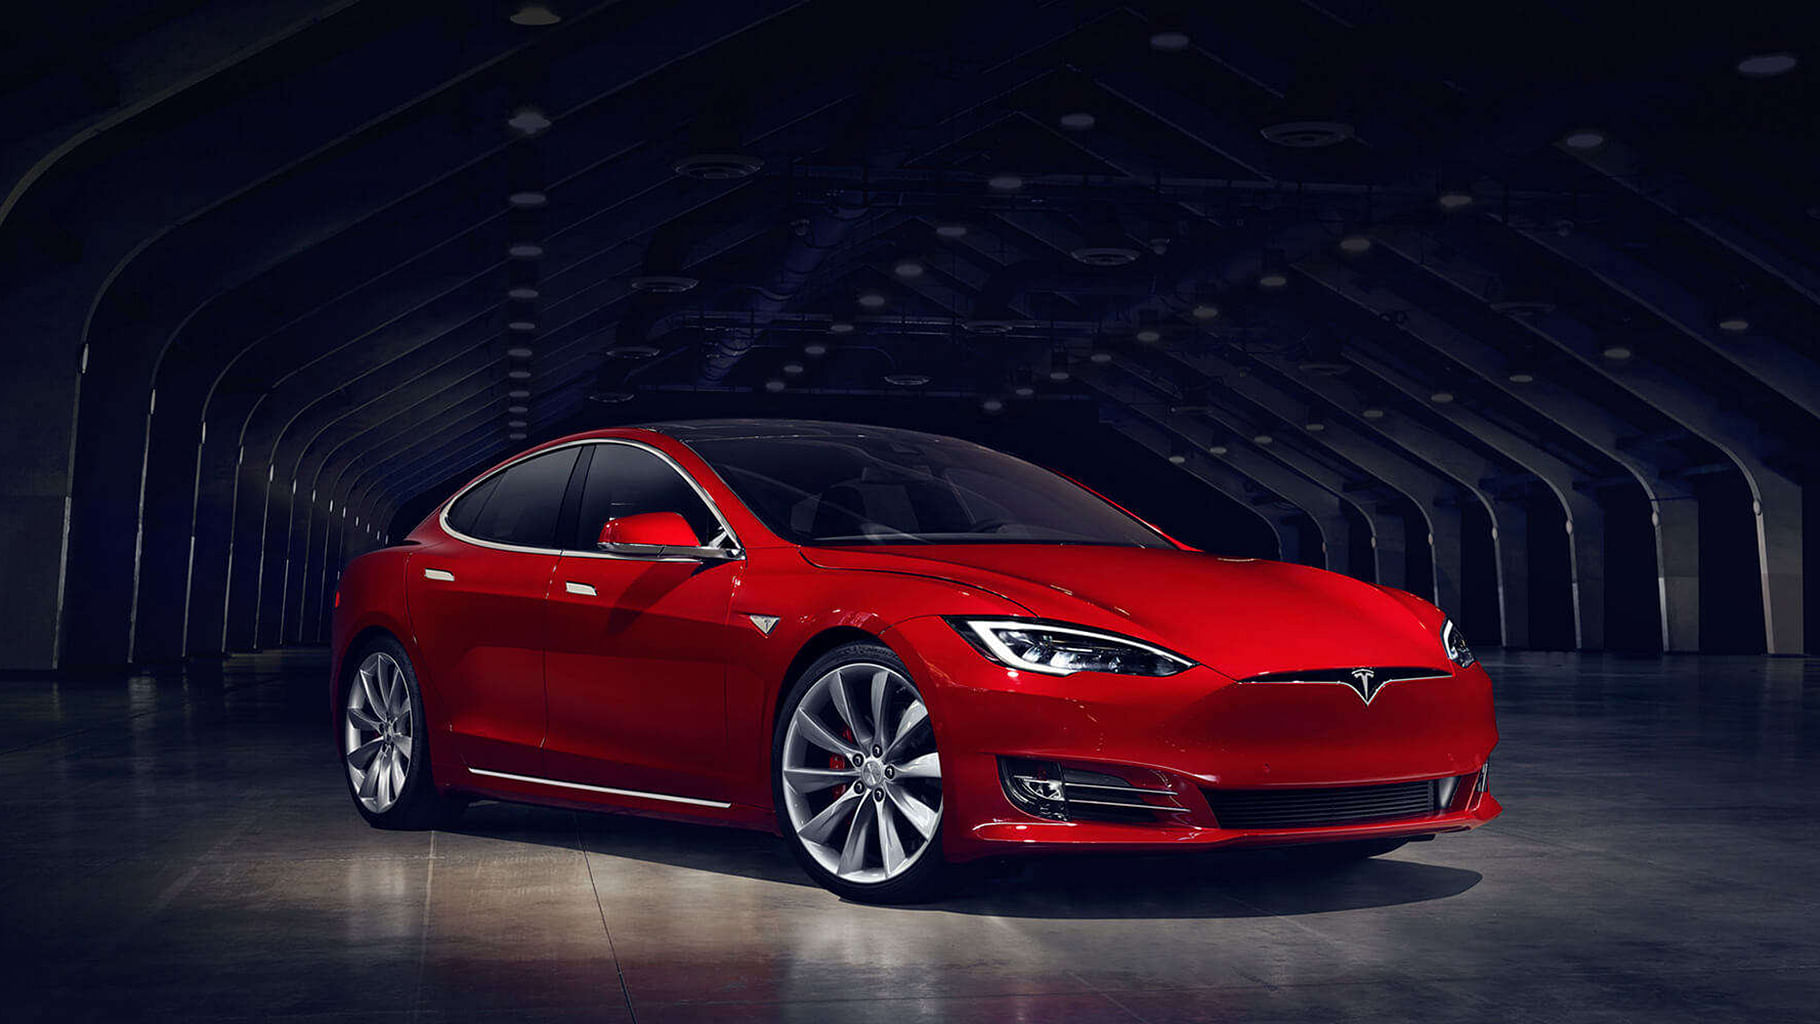 The Tesla Model S. (Photo Courtesy: Tesla Motors)